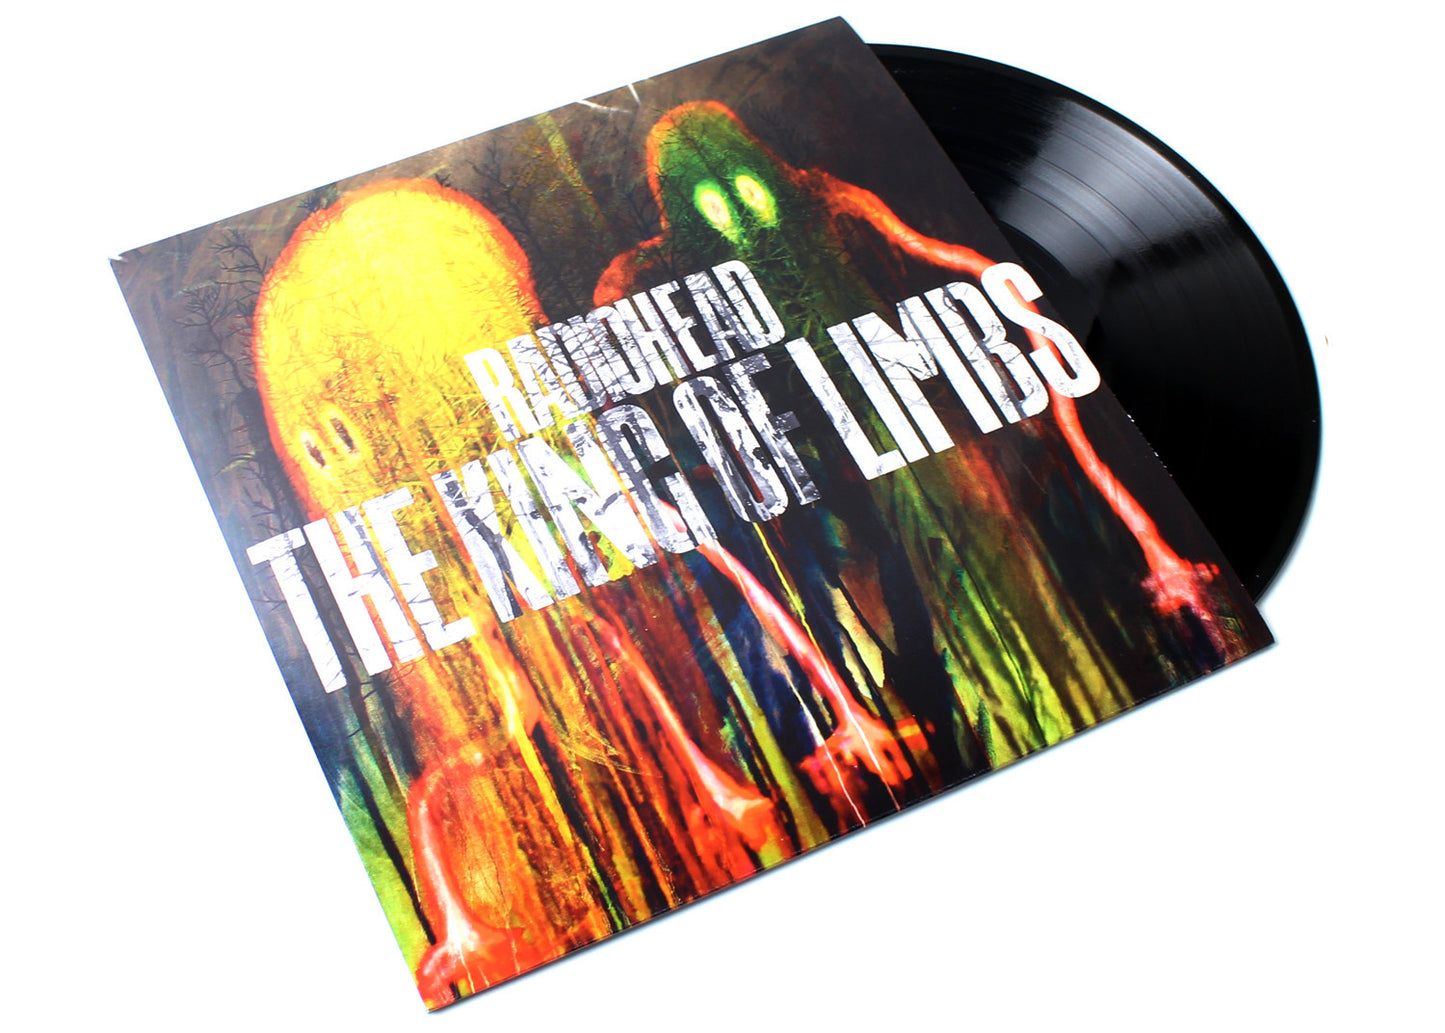 Radiohead - The King of Limbs